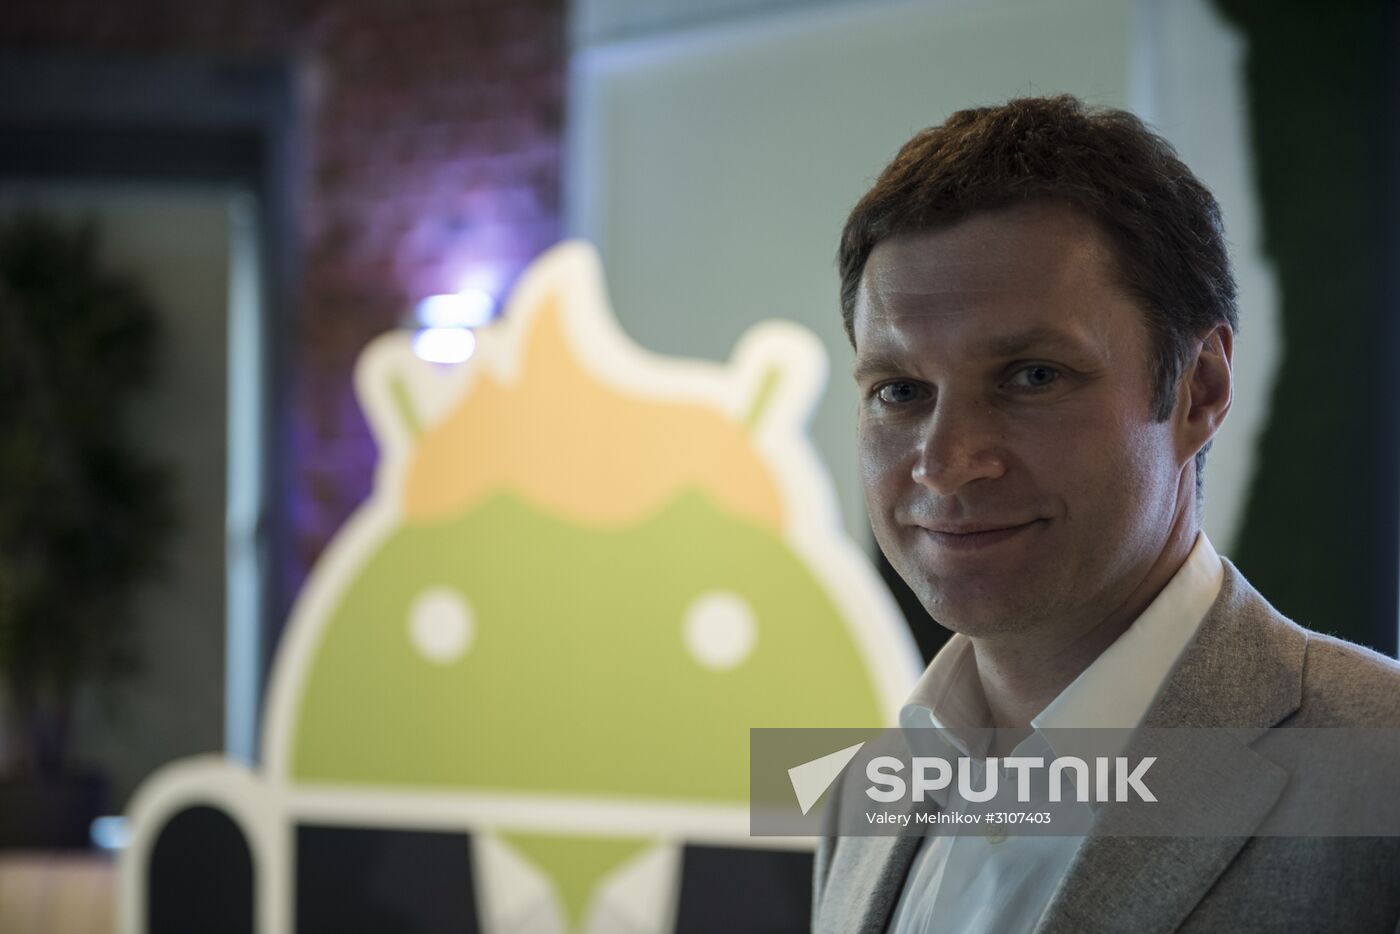 Google's new service presented in Russia